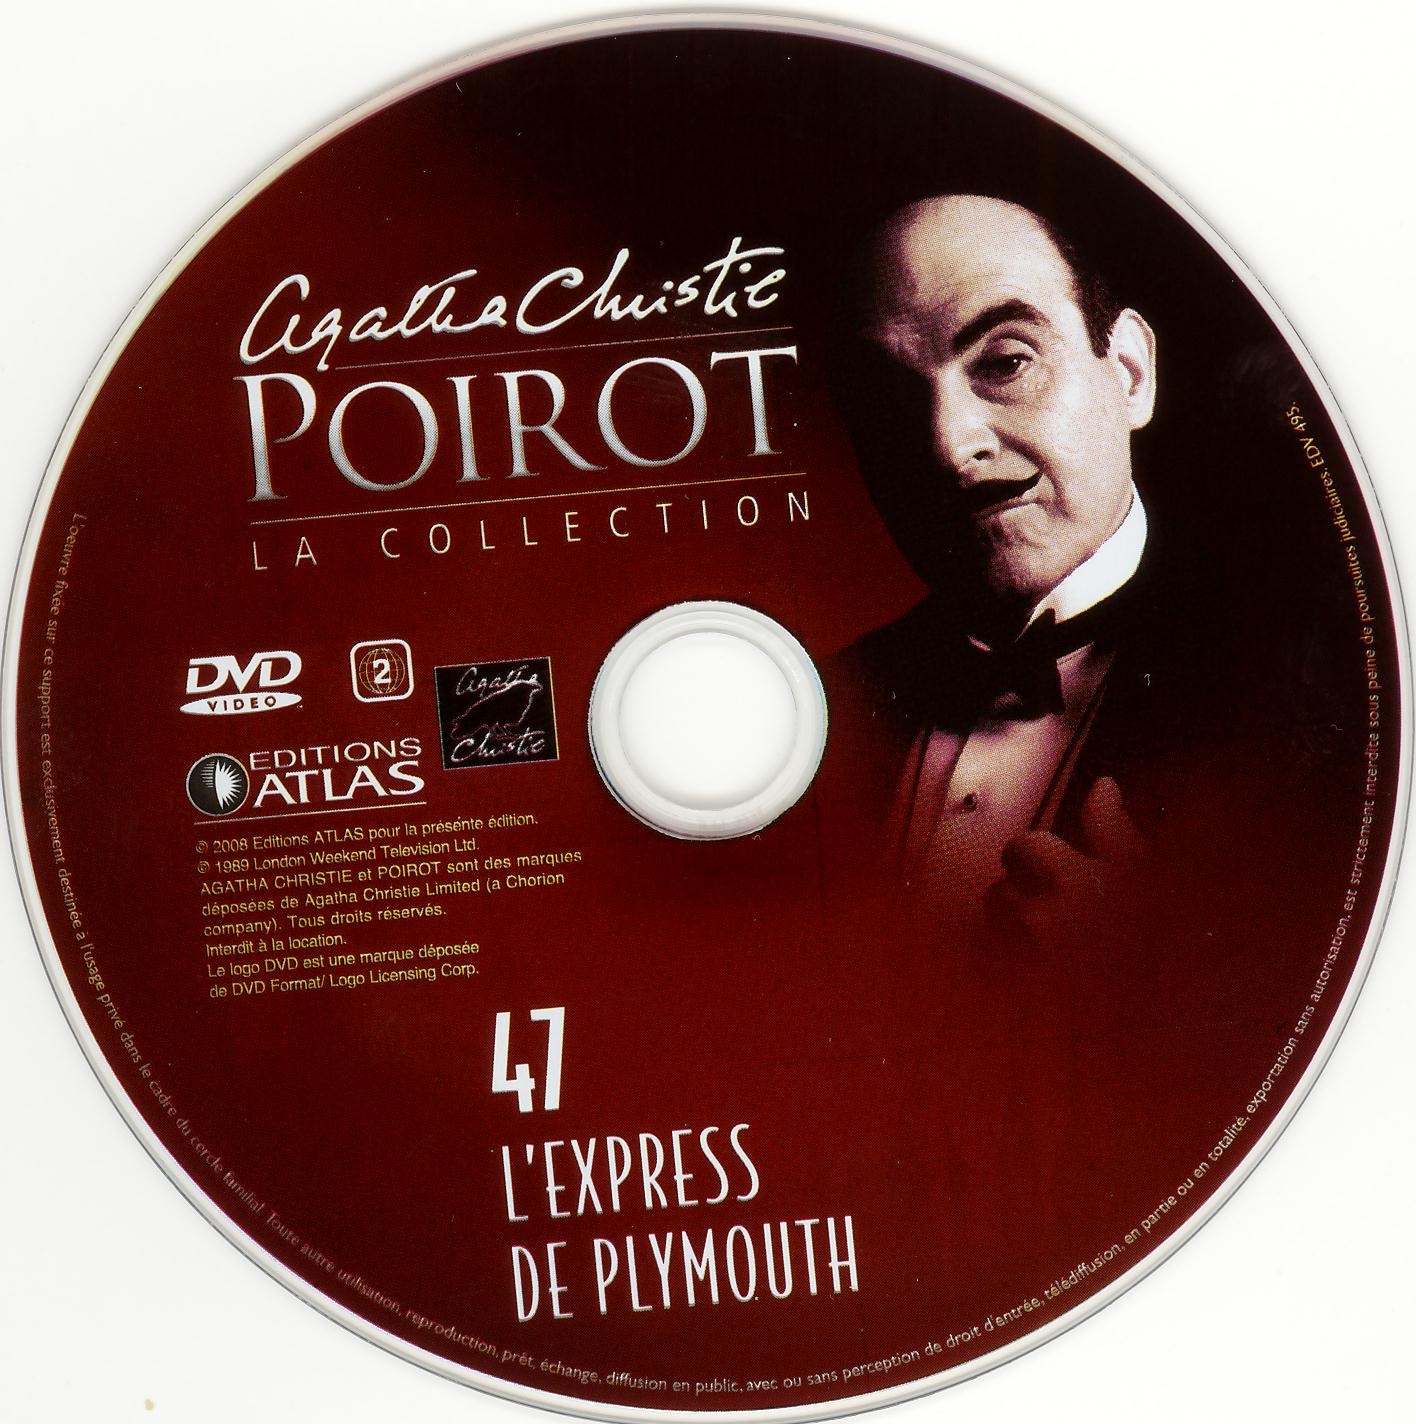 Hercule Poirot vol 47